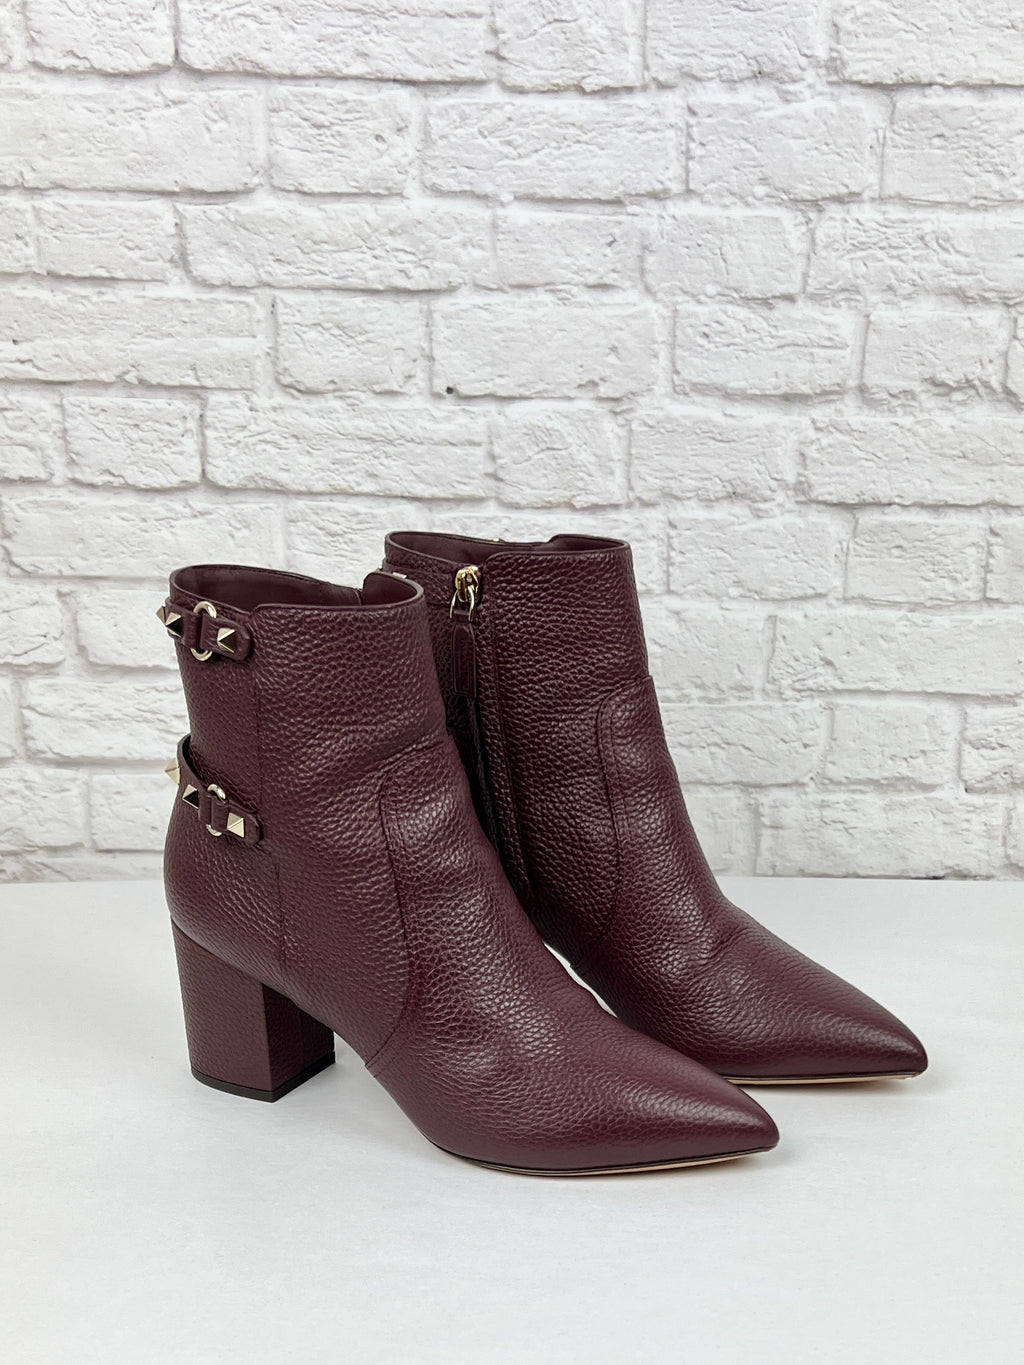 Valentino Garavani Rockstud Leather Block-Heel Booties, Merlot, Size 39.5